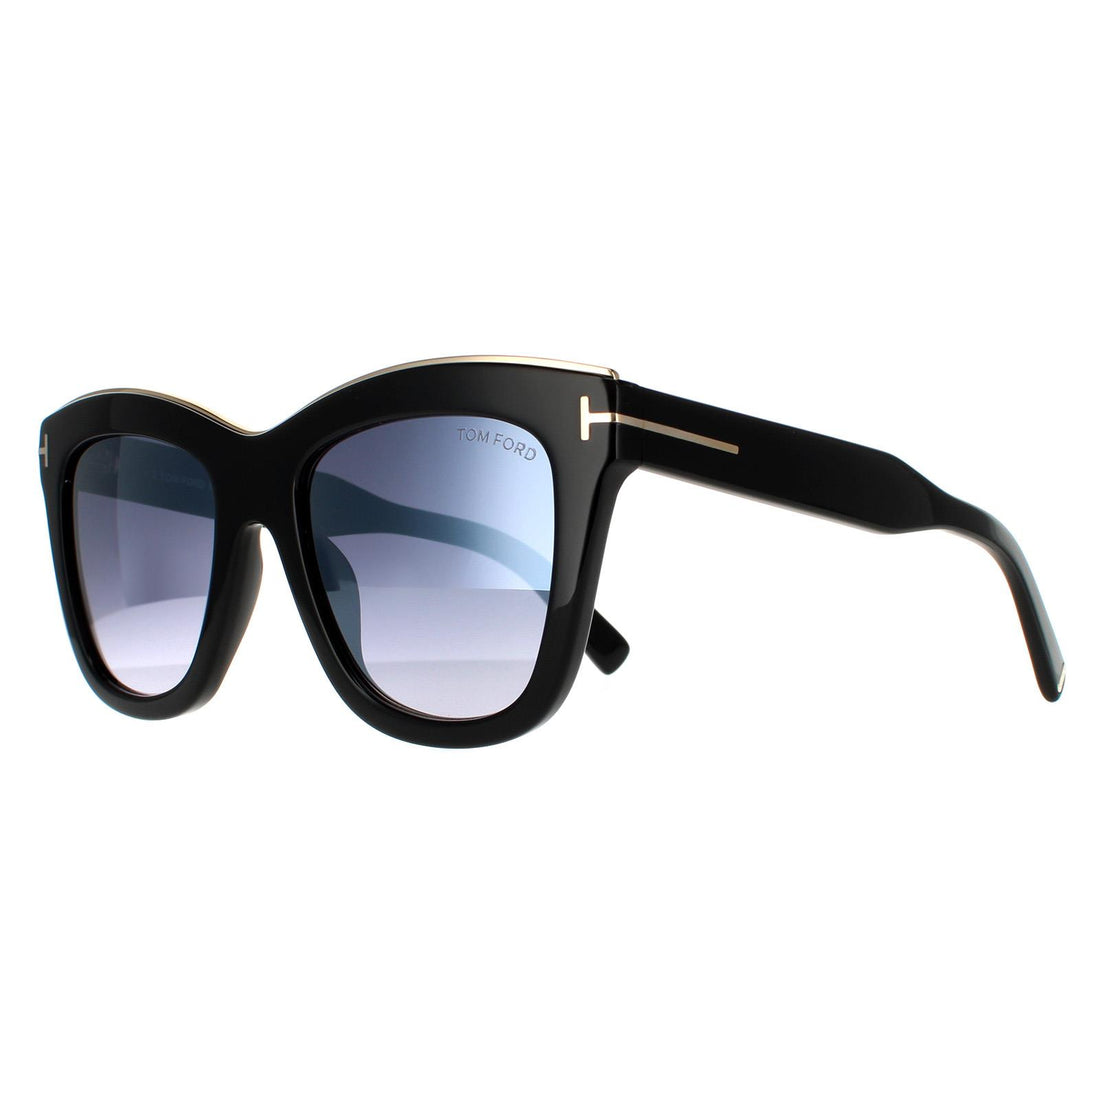 Tom Ford Sunglasses Julie FT0685 01C Black Grey Gradient